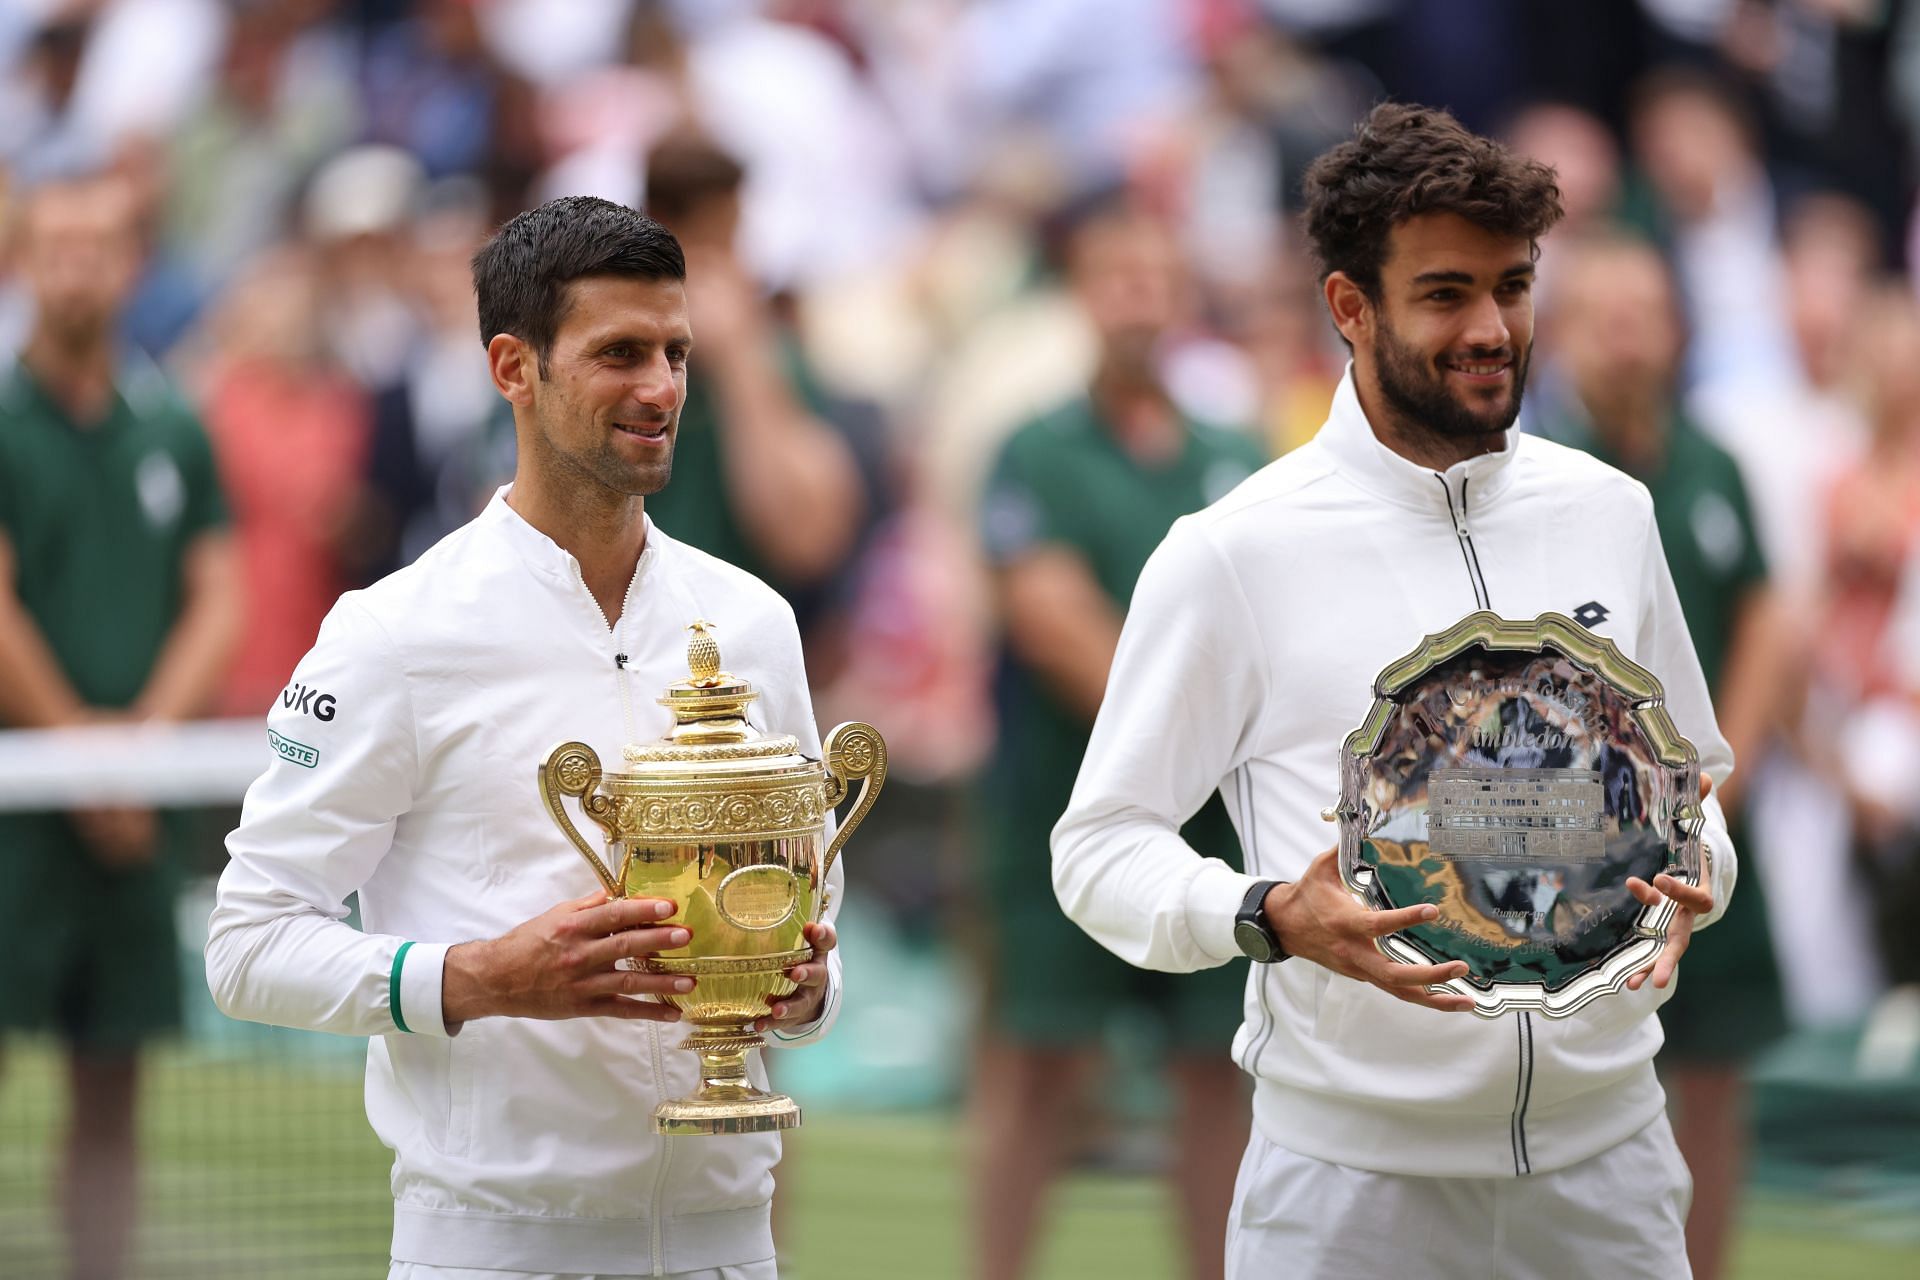 Matteo Berrettini (right) came up second-best against Novak Djokovic in the 2021 Wimbledon final.